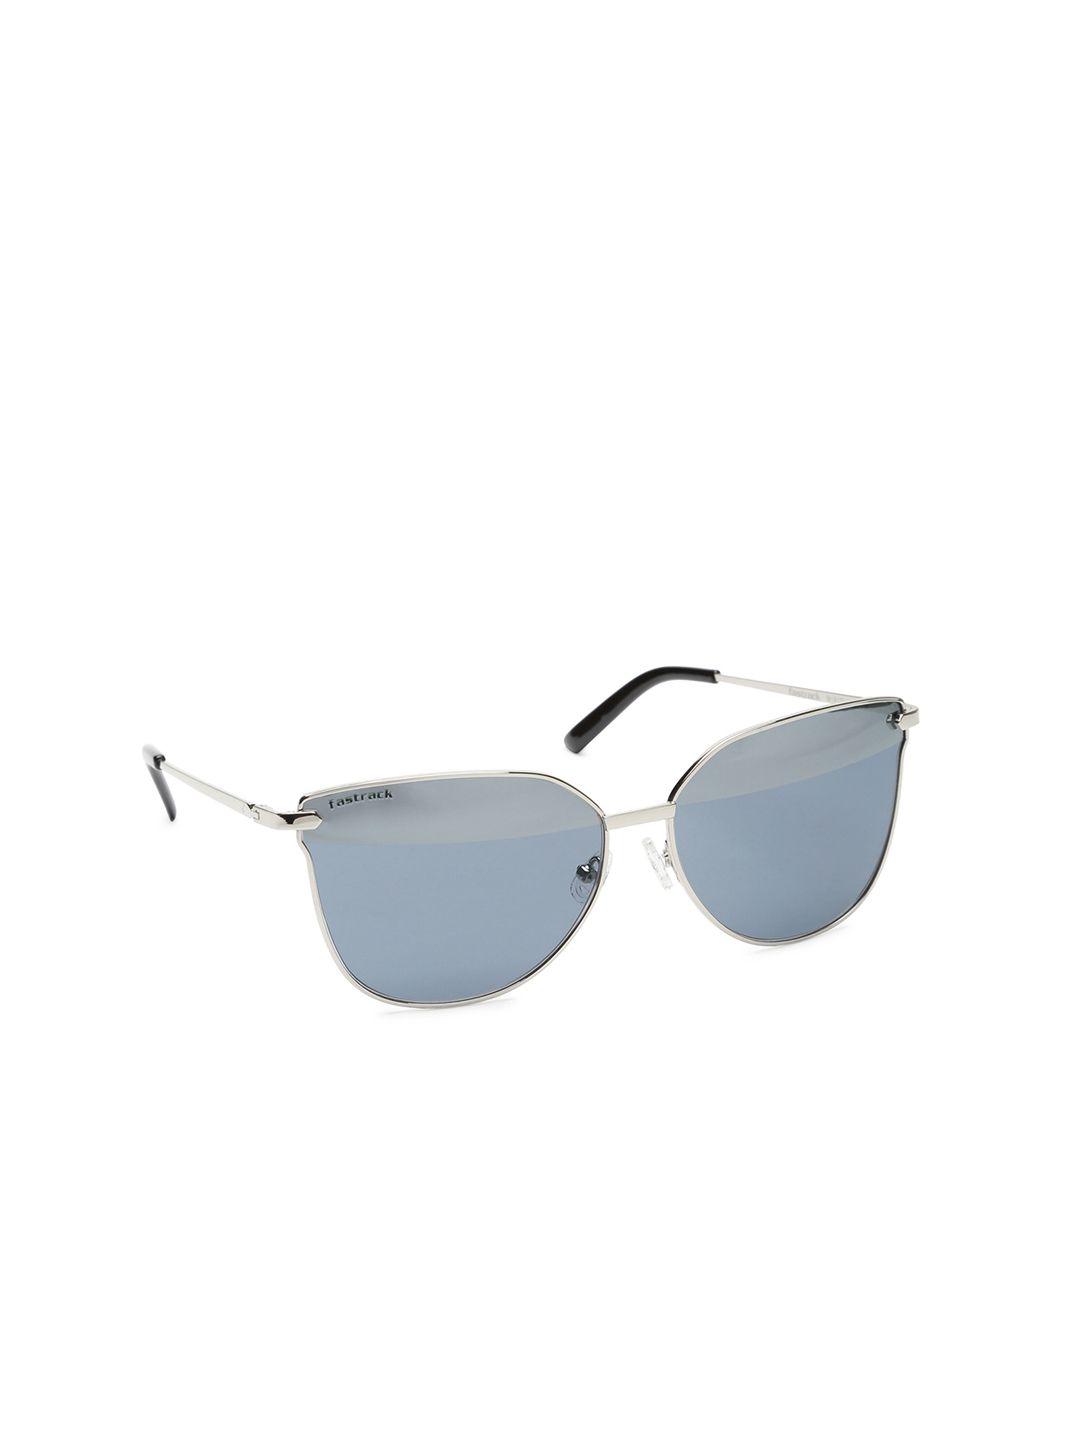 fastrack-women-oval-sunglasses-m181sl2f